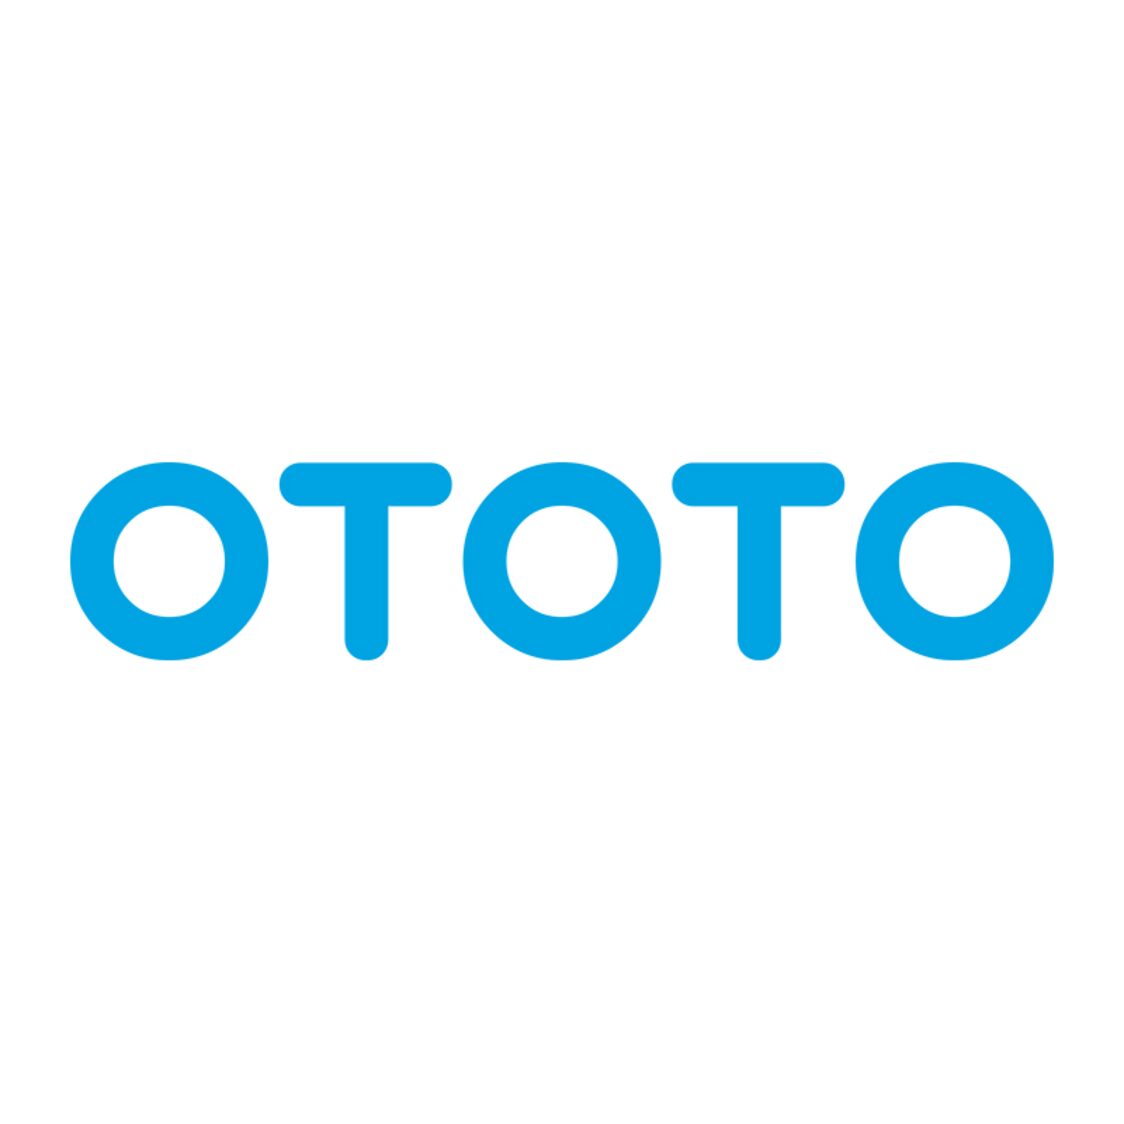 CROC CHOP - OTOTO Design Ltd Trademark Registration